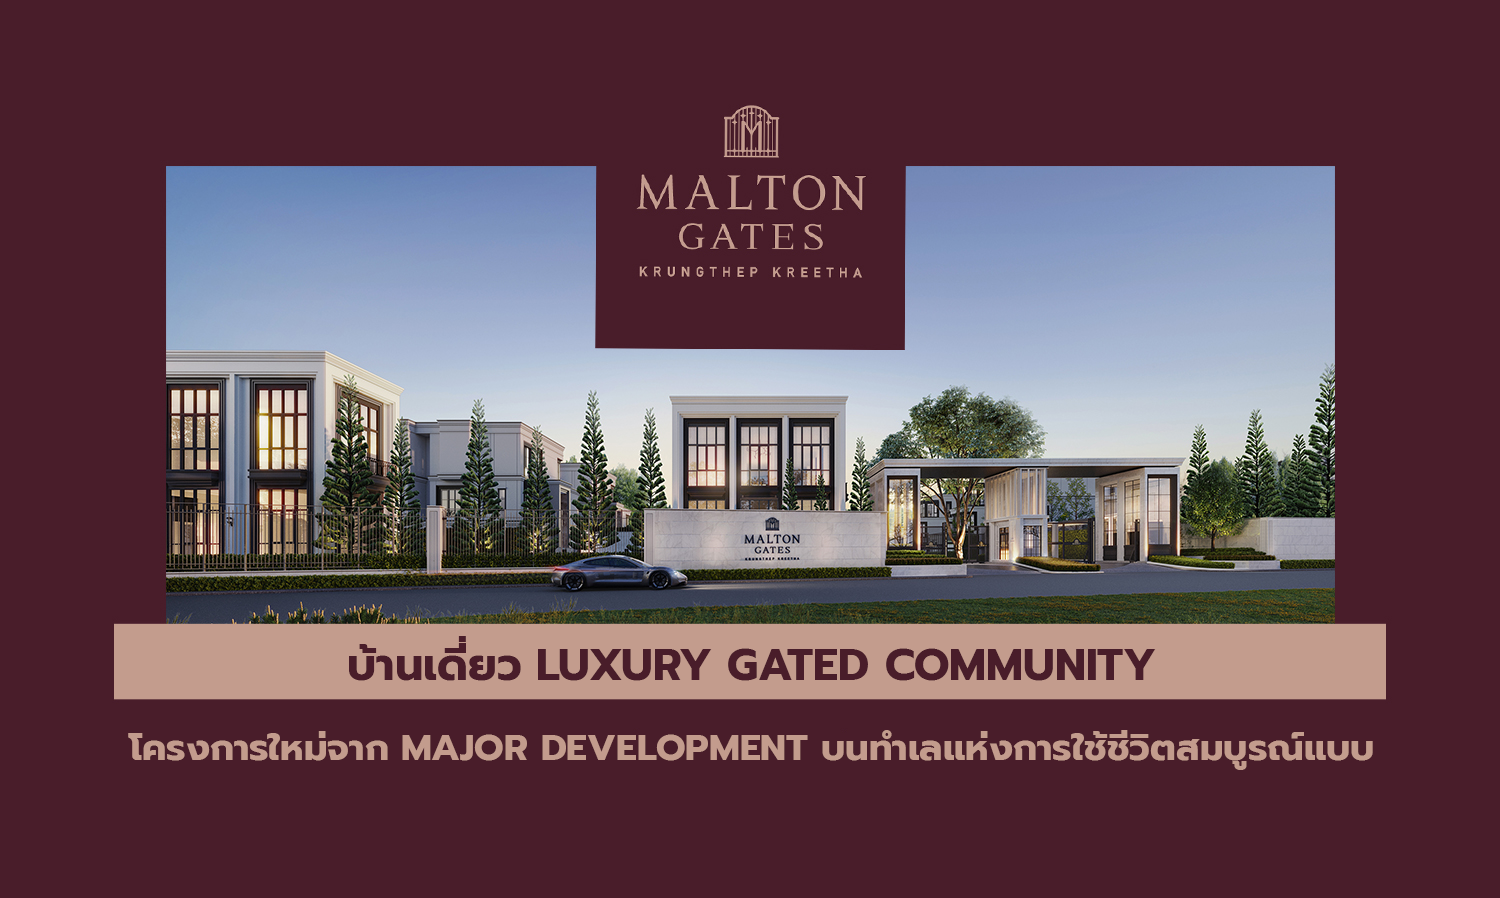 malton-gates-krungthep-kreetha-บ้านเดี่ยว-luxury-gated-community-โครงการใหม่จาก-mjd-บนทำเลแห่งการใช้ชีวิตสมบูรณ์แบบ